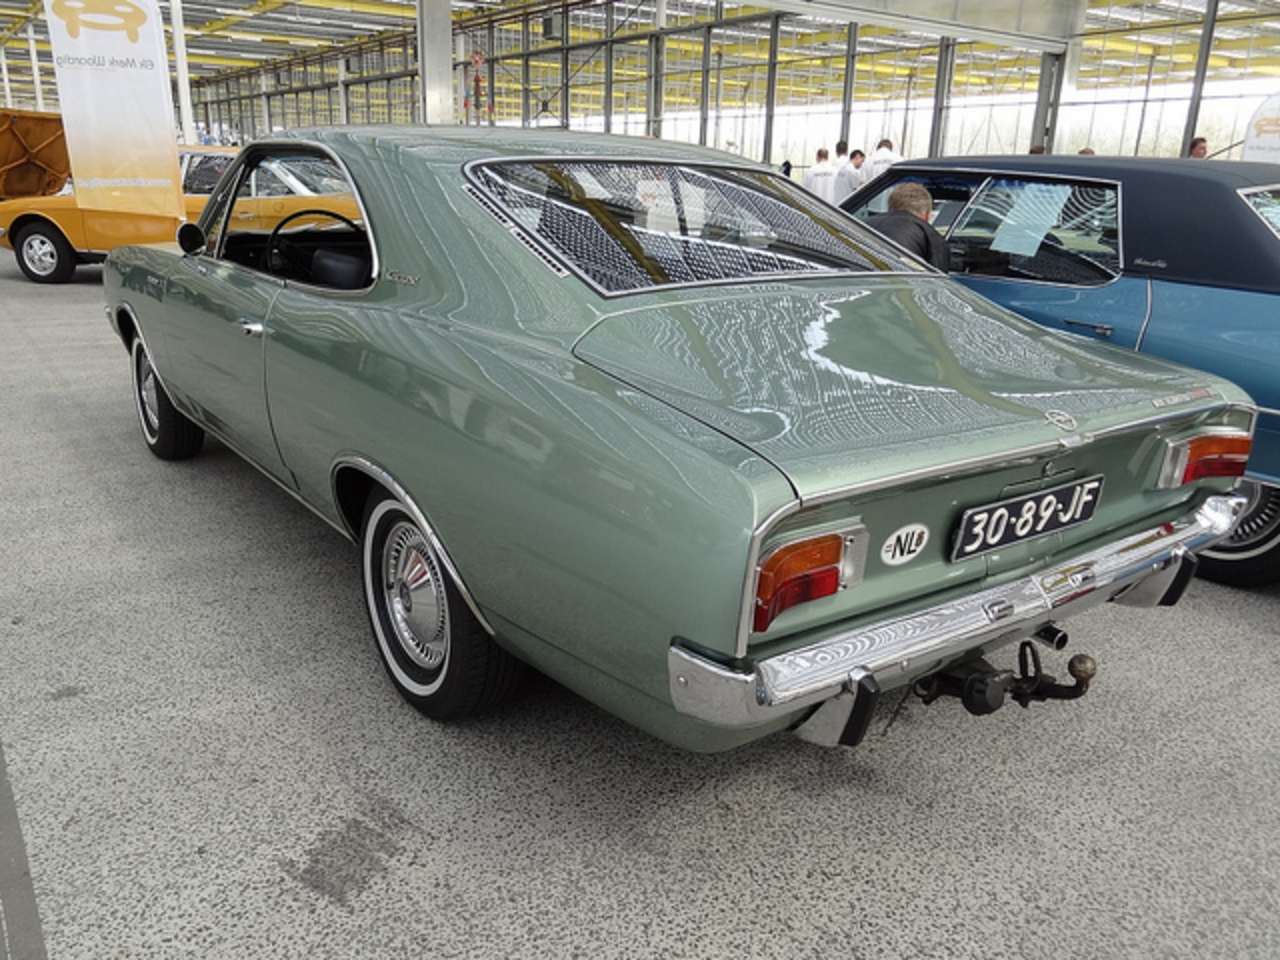 Opel Rekord coupÃ© | Flickr - Photo Sharing!